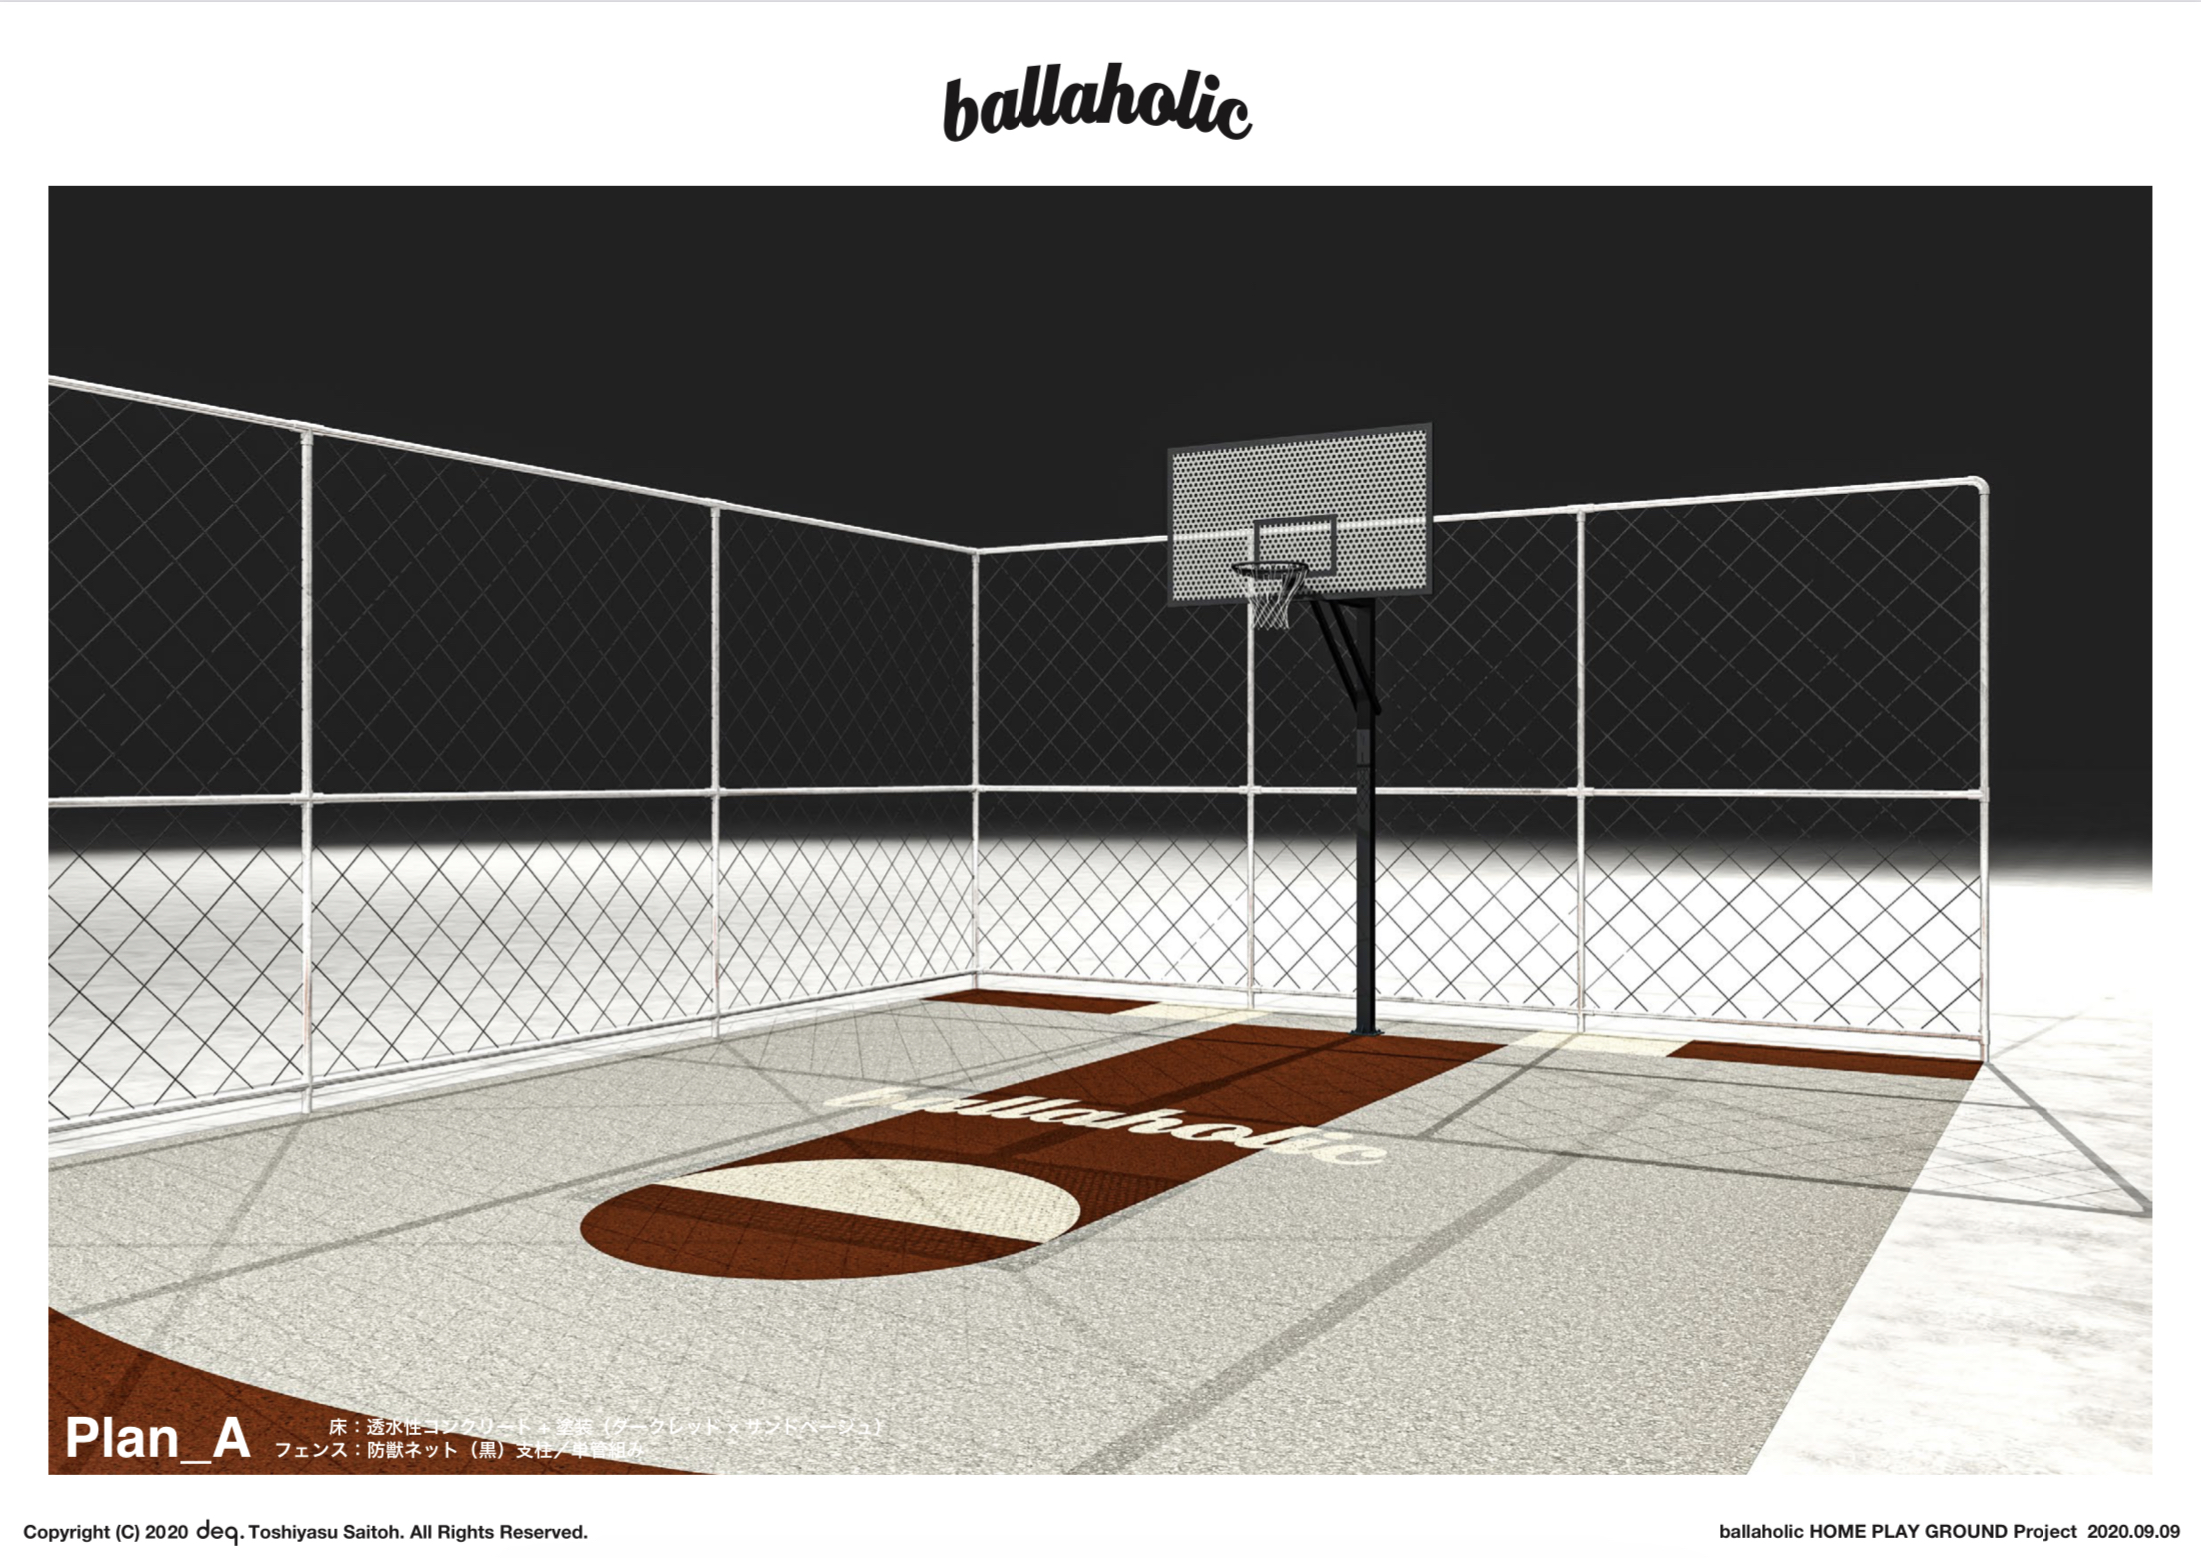 Ballaholicのバスケットコートを支える メーカー 紹介 ストリートバスケブランド Ballaholic との協業 9 水たまり対策 透水コン 透水性舗装仕上材 生コンポータル